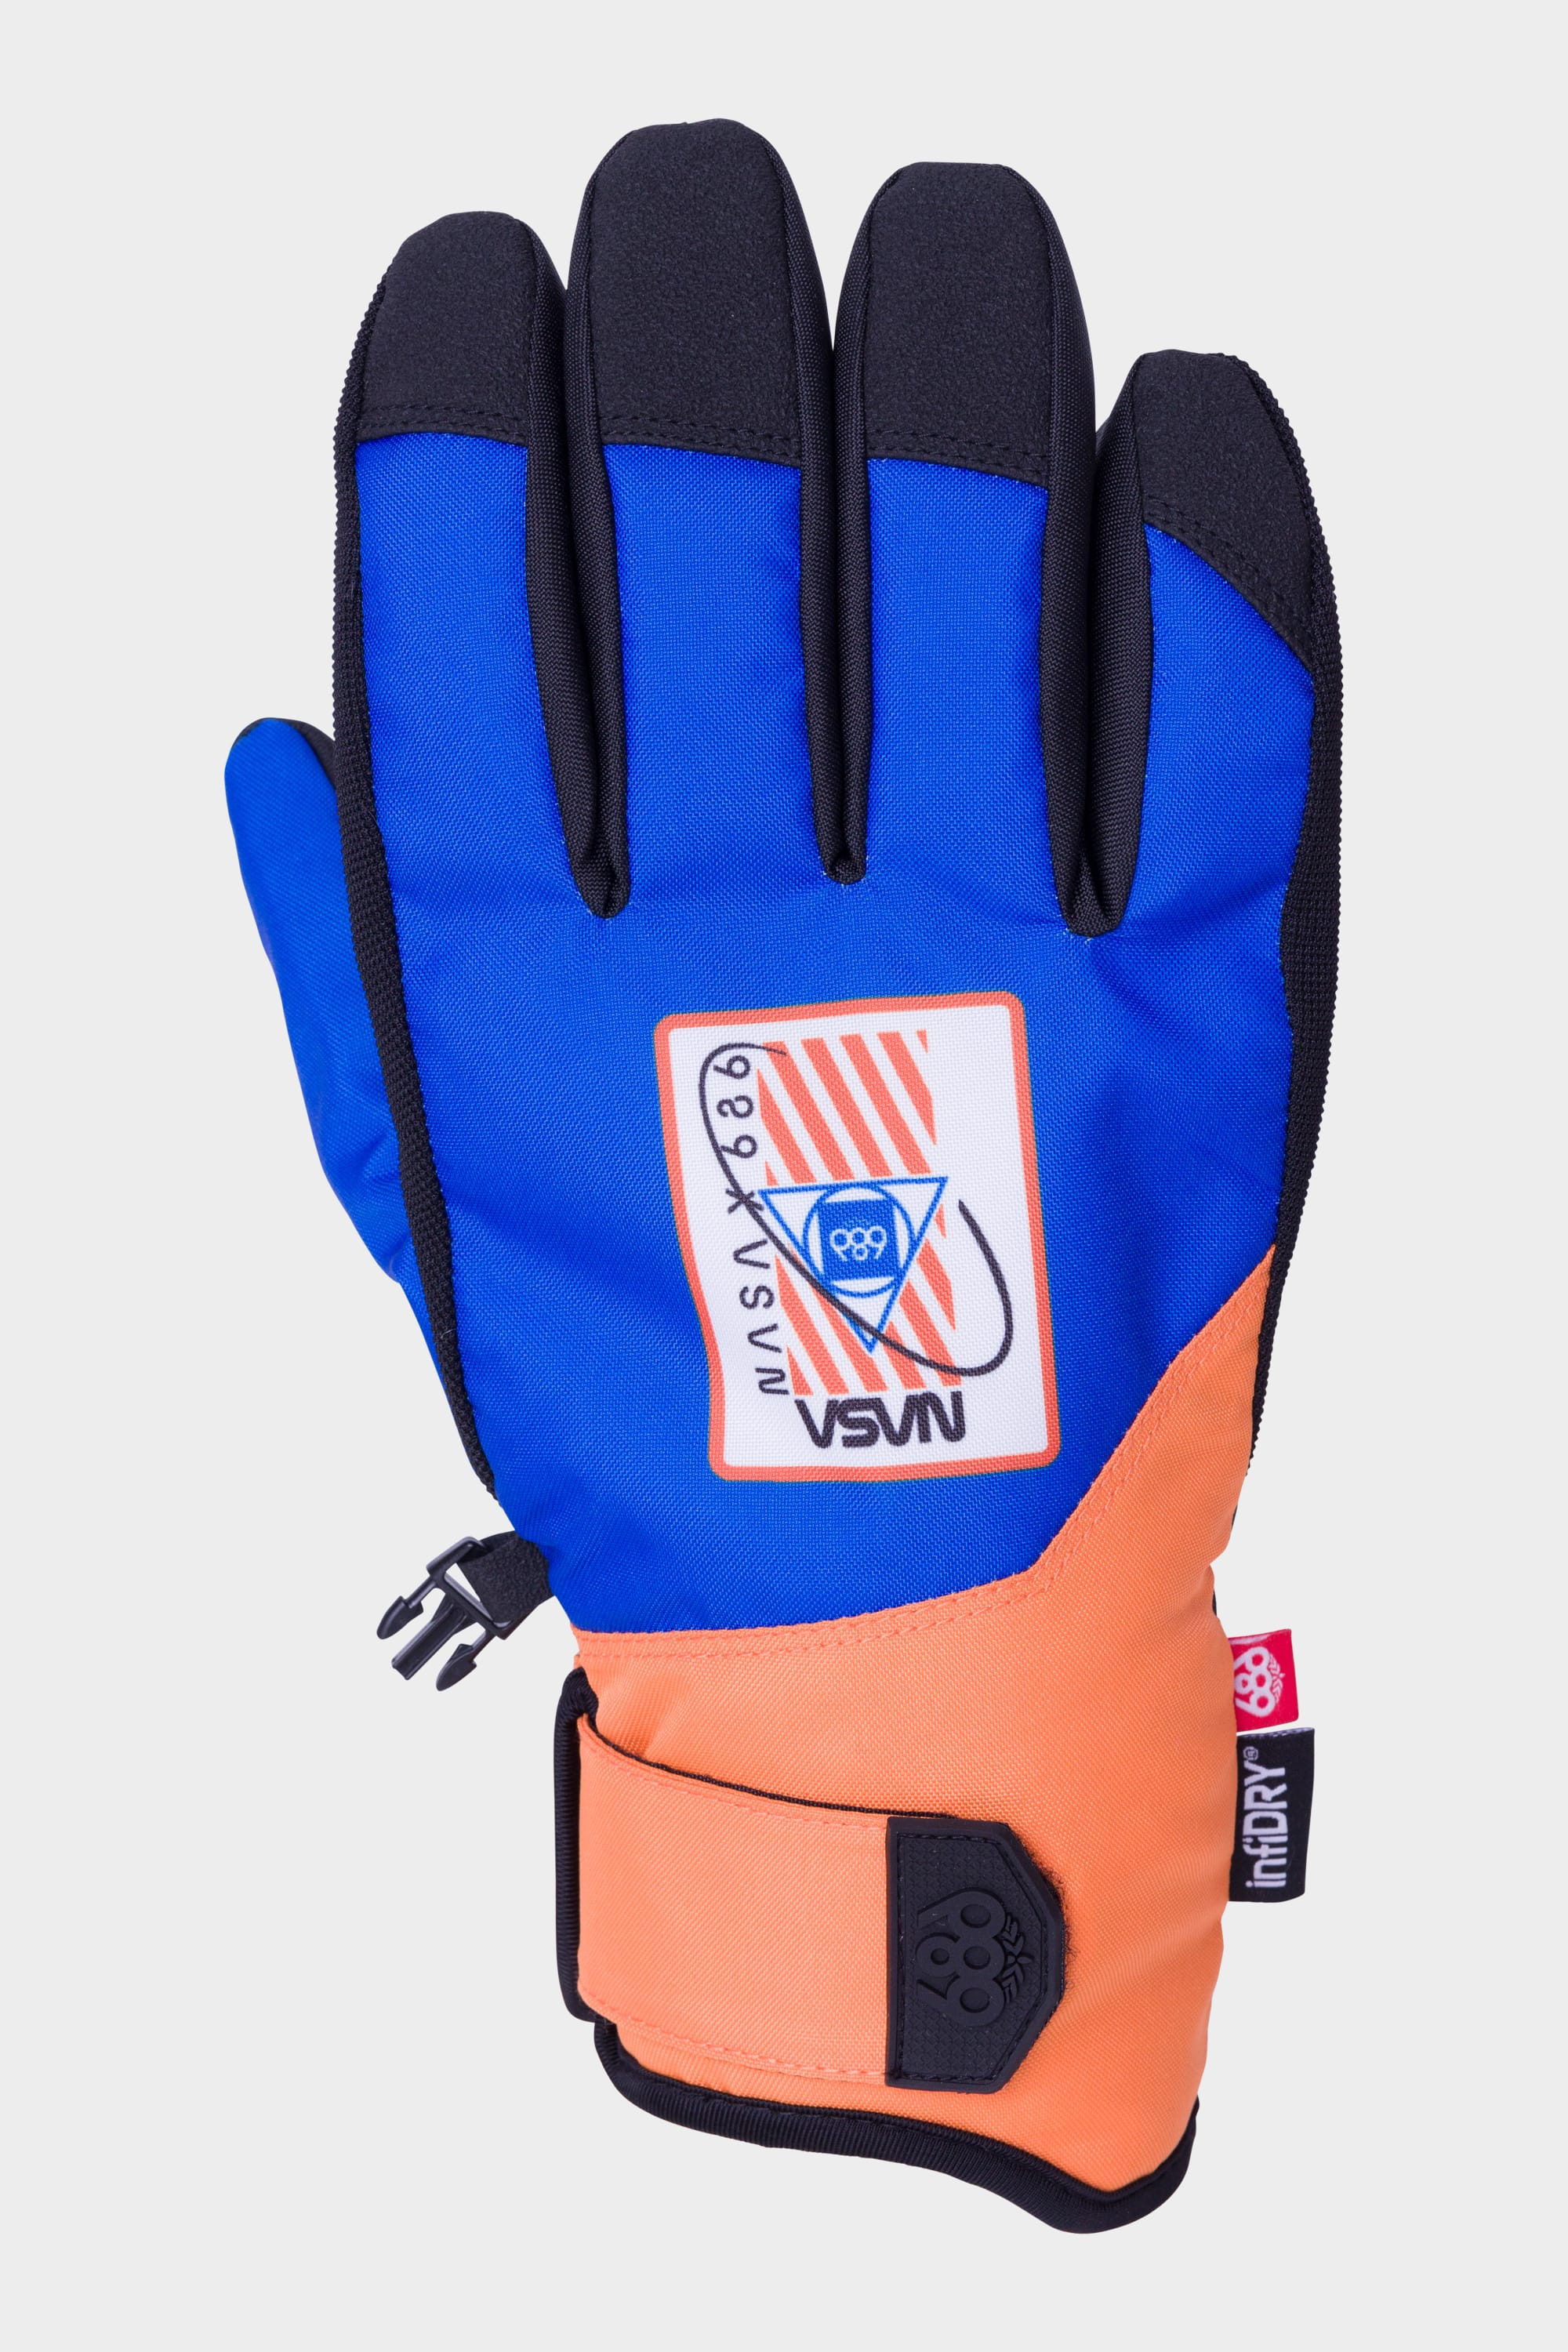 686 Primer dark camo gants de ski homme Textile tech Gants Hommes  –  HawaiiSurf